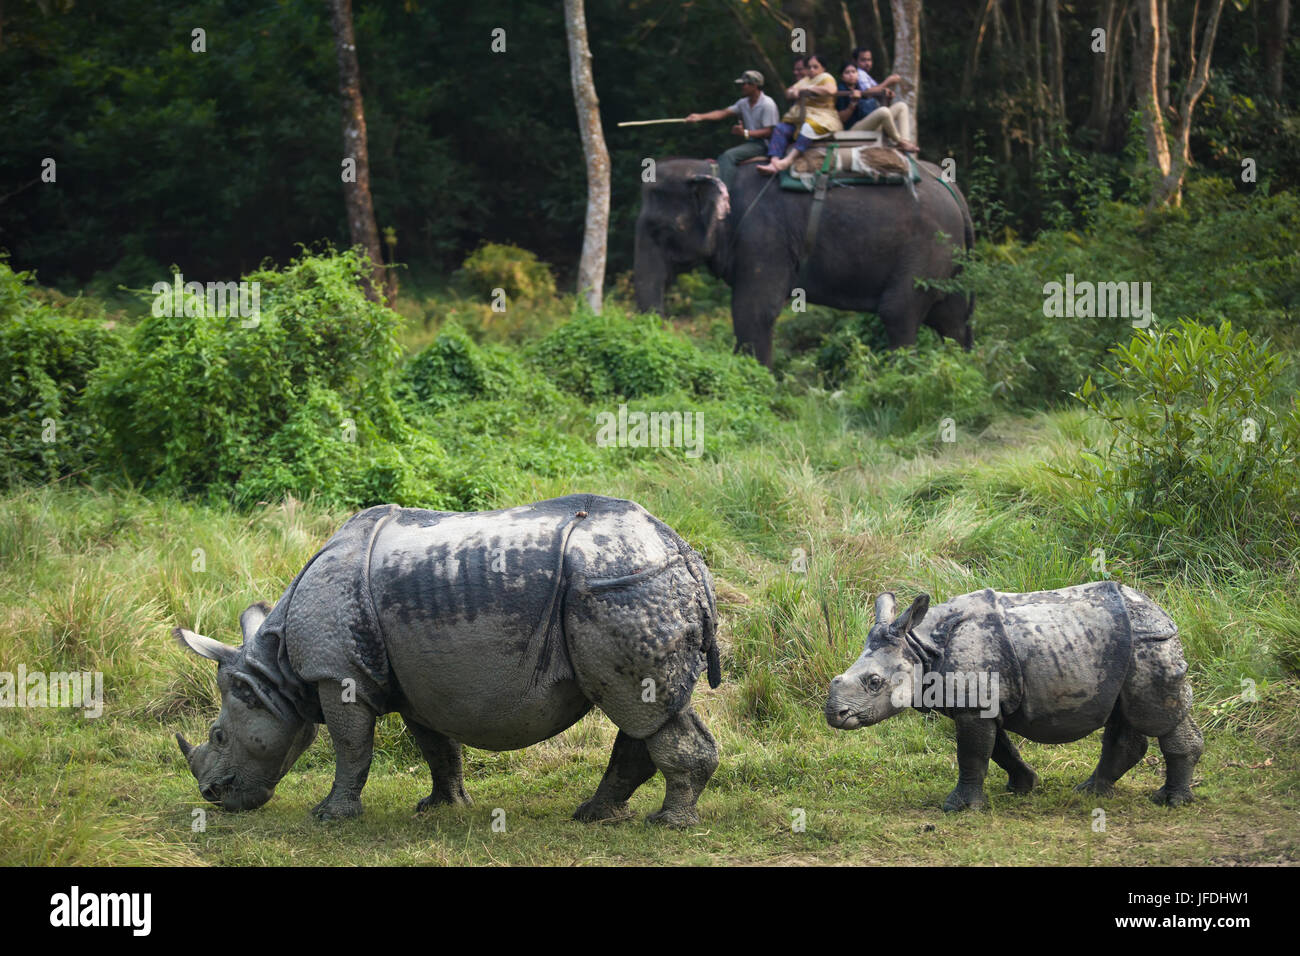 CHITWAN NATIONAL PARK/NEPAL - JUNE 2014 - Rhinos family walking in the jungle during safari on elephants. June, 16, 2014 in Chitwan, Nepal. Stock Photo